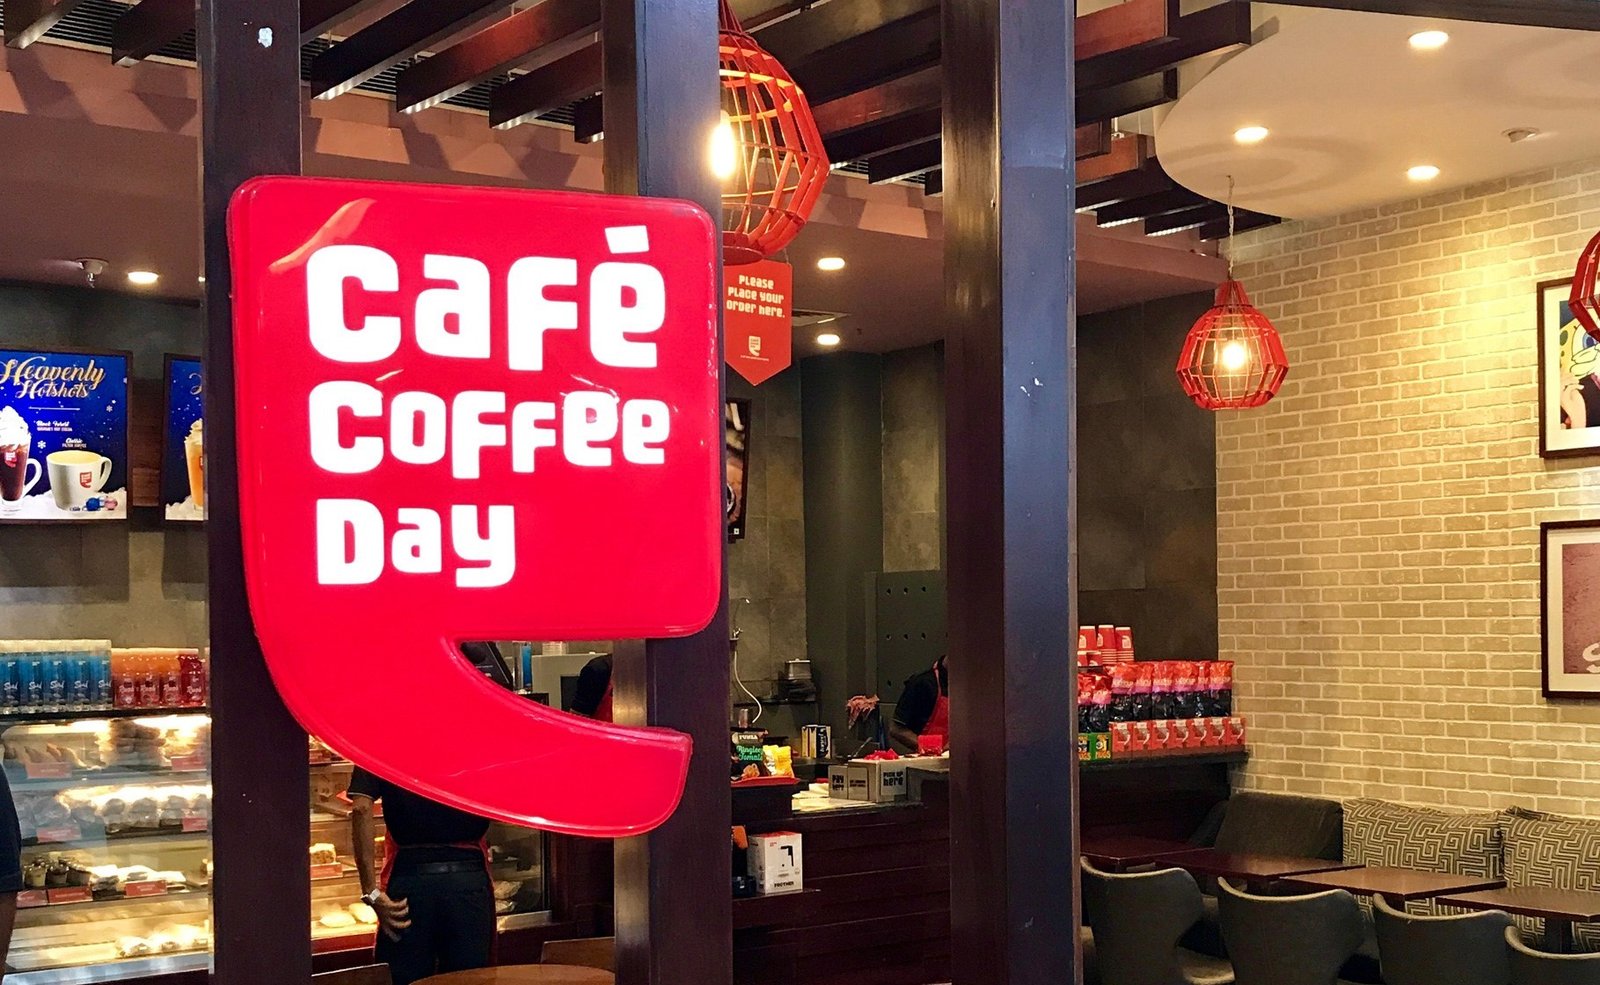 Cafe Coffee Day Marketing Mix